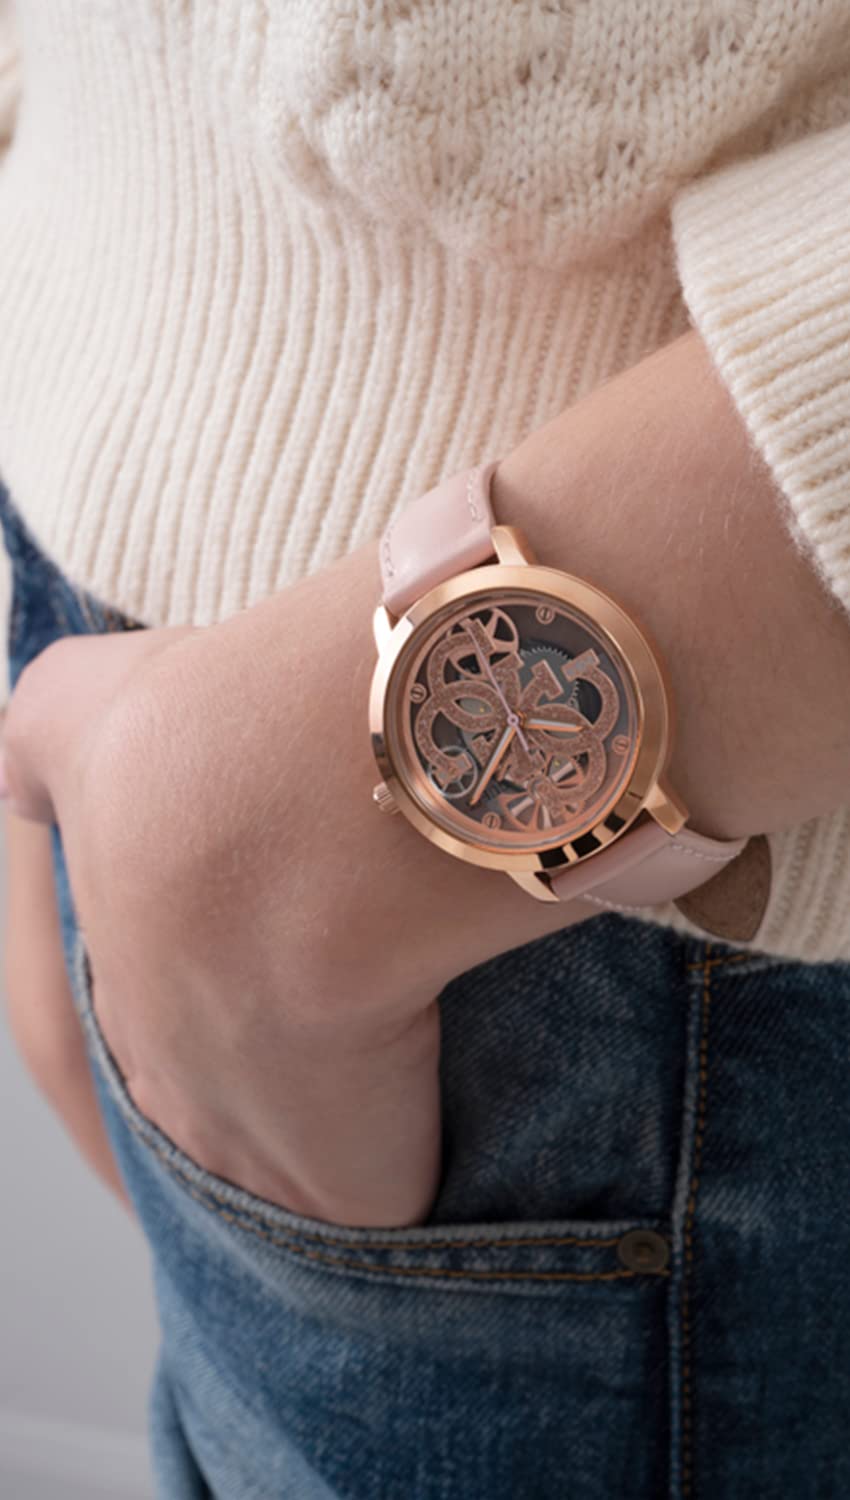 GUESS Women's 36mm Watch - Pink Bracelet Rose Gold Dial Rose Gold Tone Case